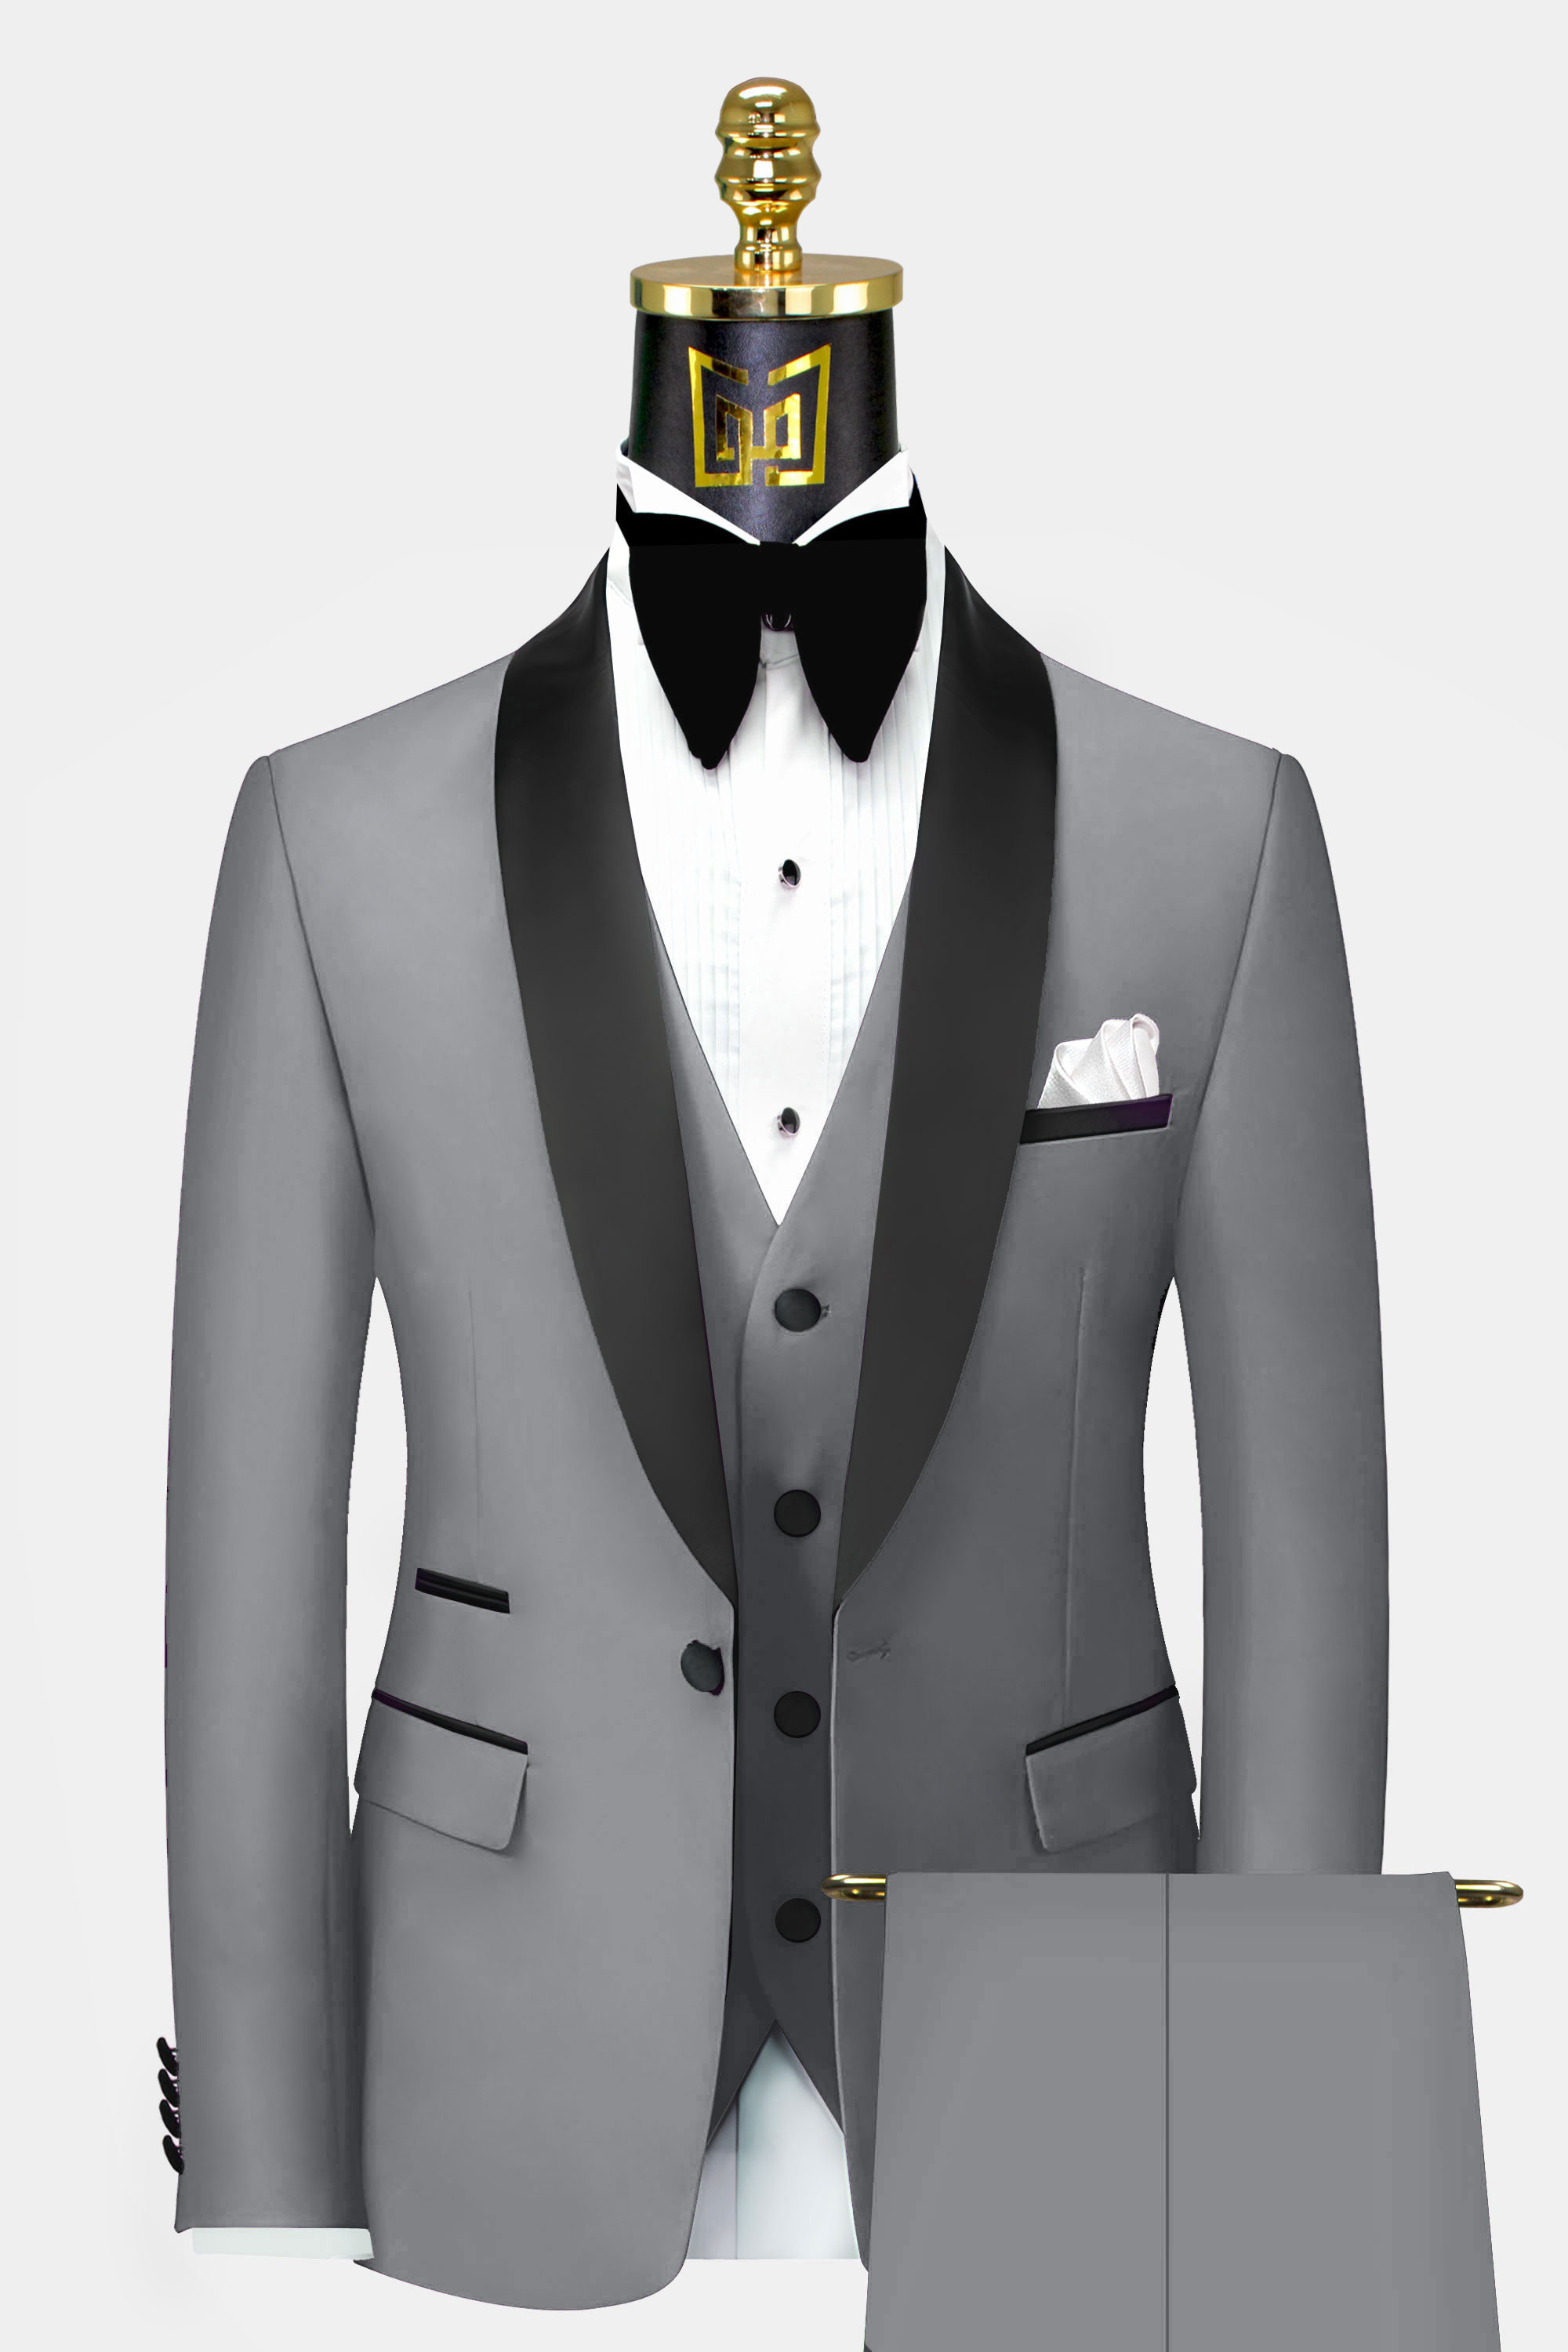 Medium Grey Tuxedo - 3 Piece